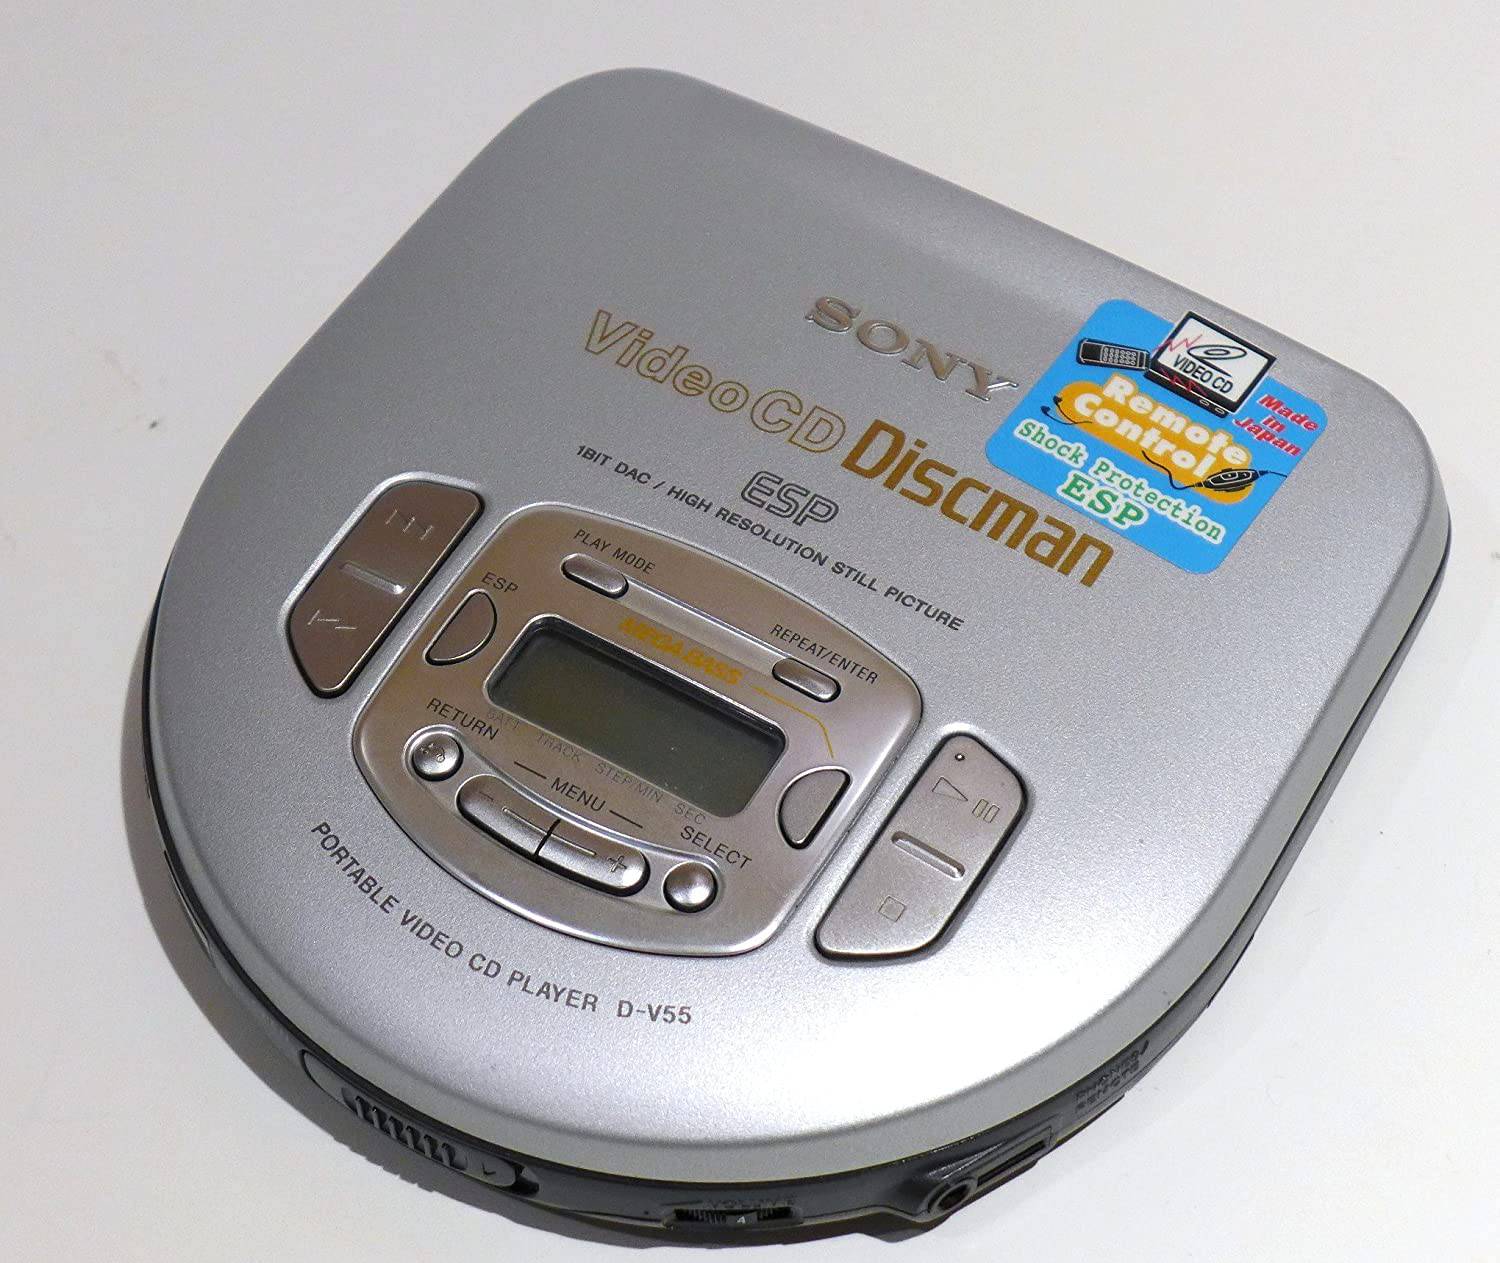 Sony D-V55